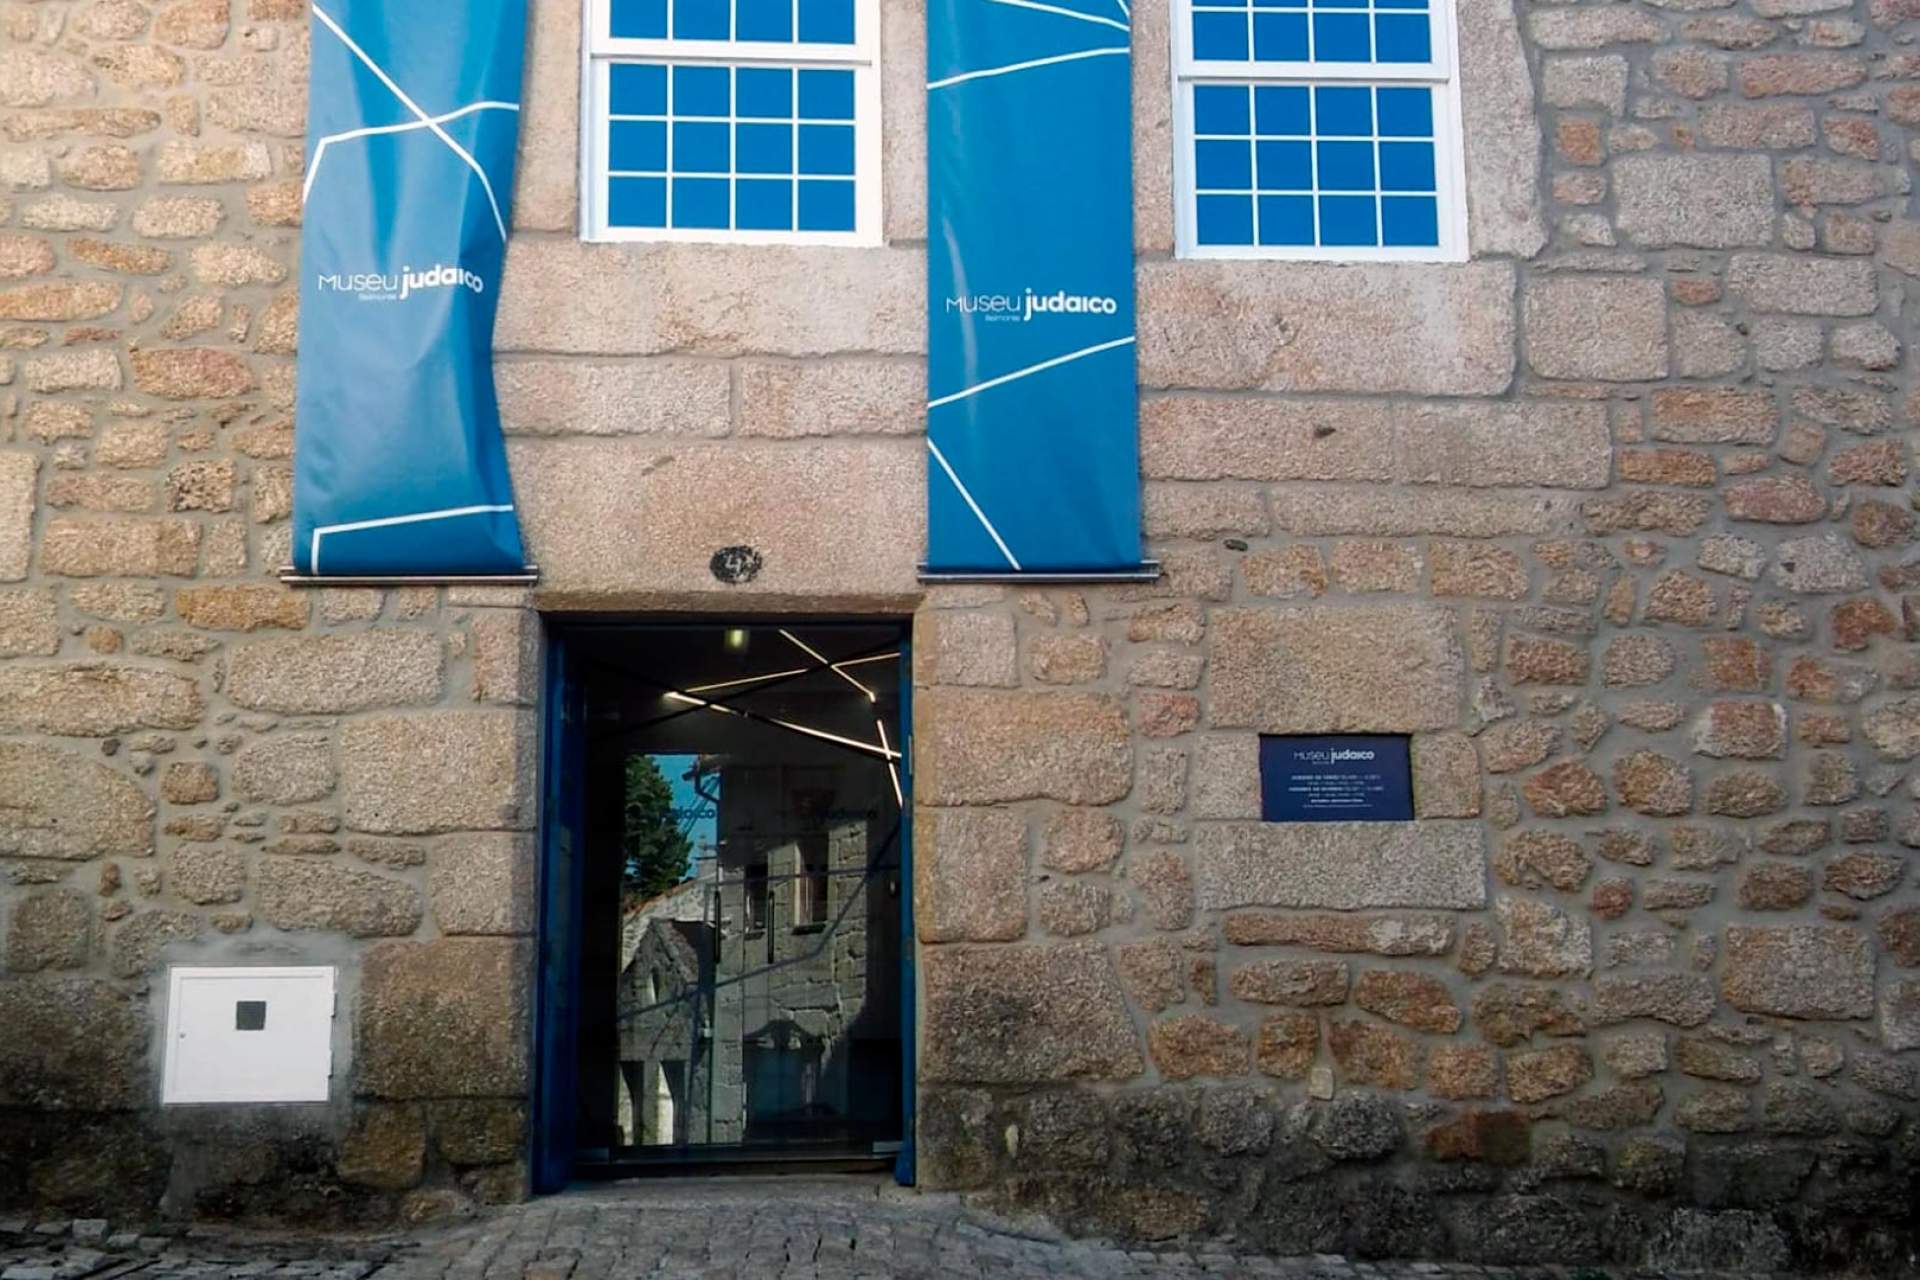 Exterior of Belmonte Jewish Museum / Belmonte / EMPDS - Empresa Municipal de Belmonte